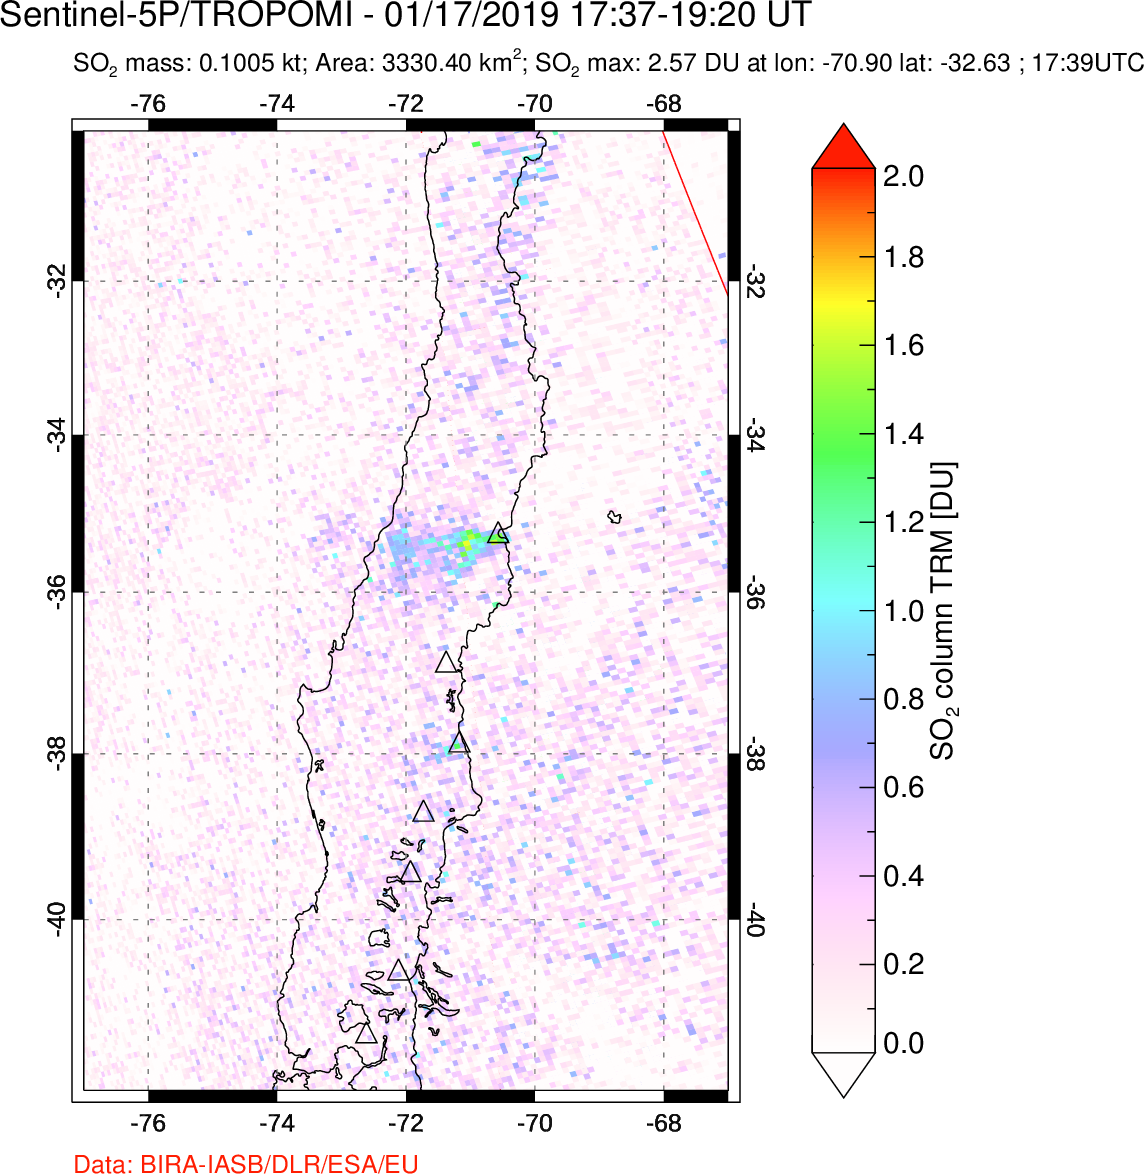 A sulfur dioxide image over Central Chile on Jan 17, 2019.